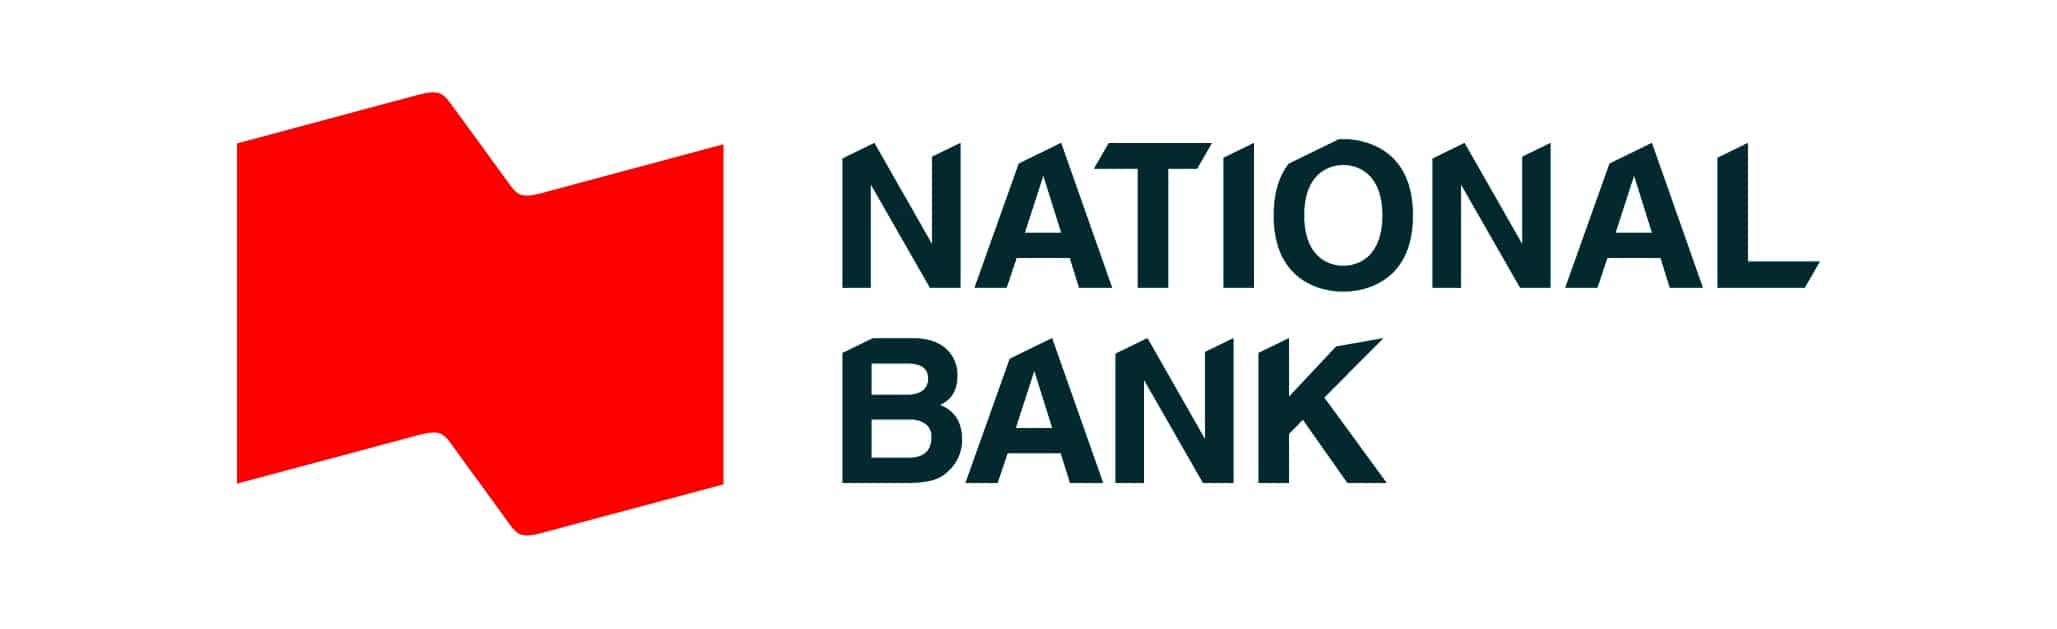 National Bank_4c